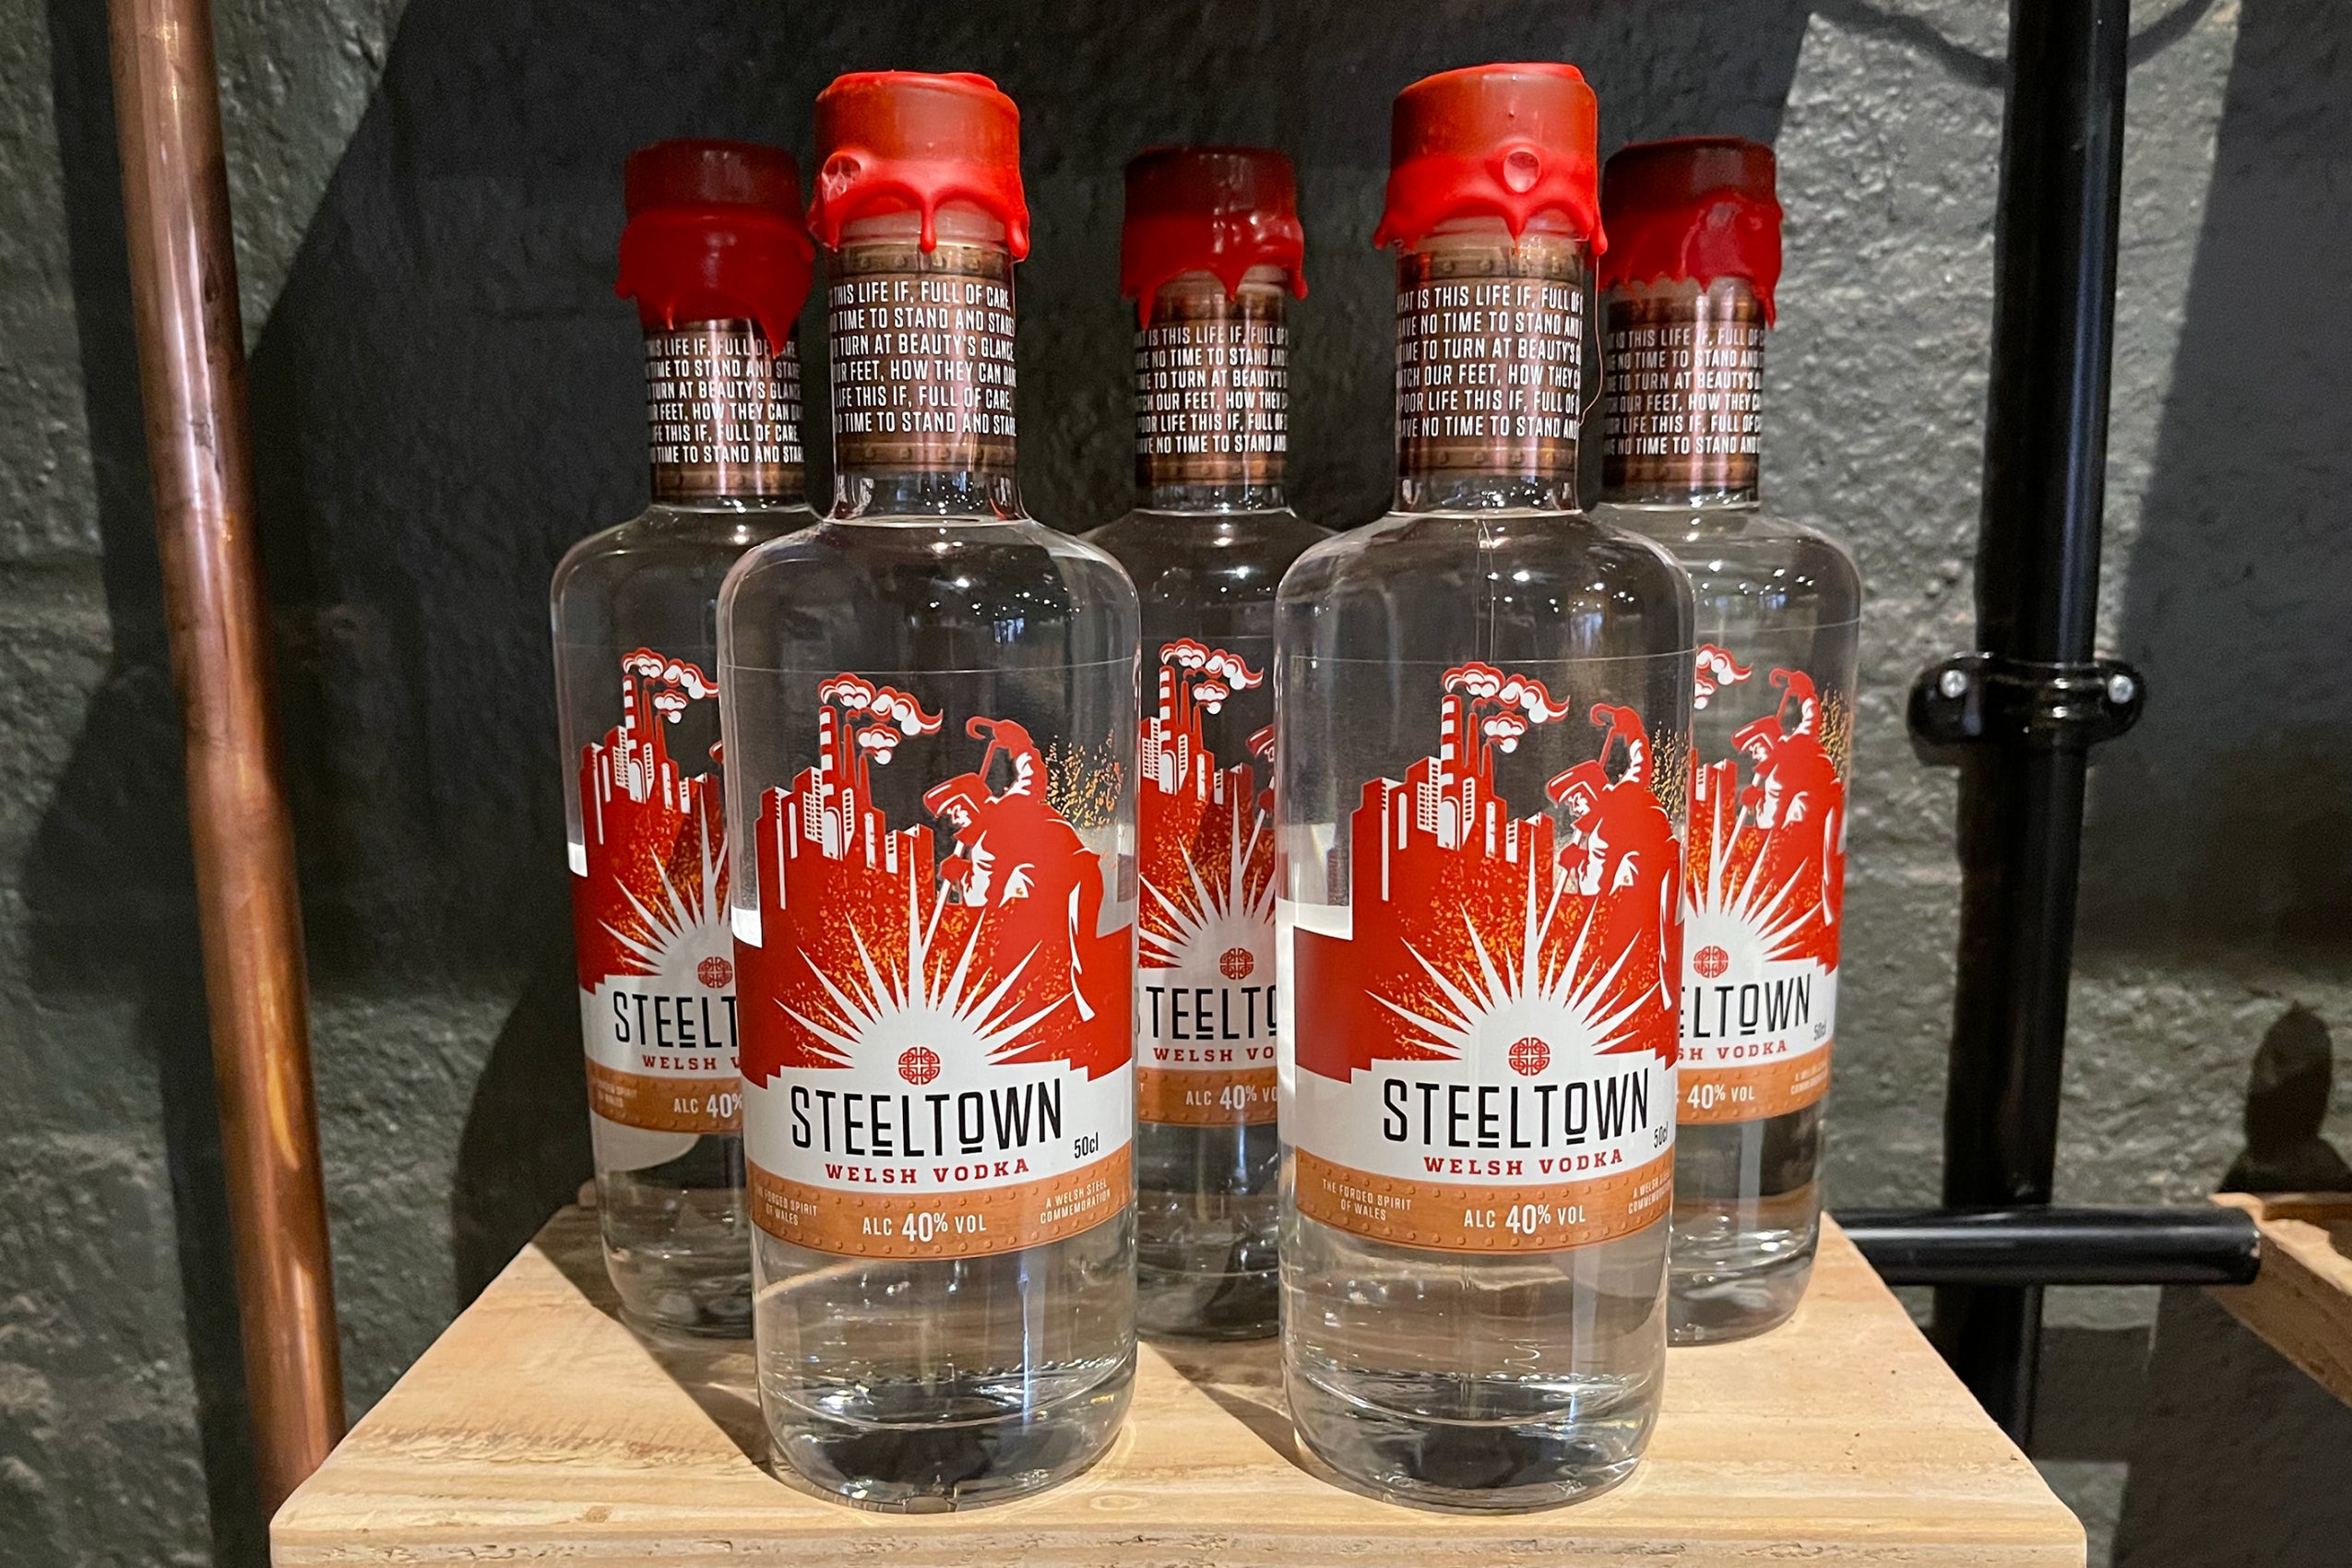 Steeltown Welsh Vodka Filtered Through Anthracite for a Crisp